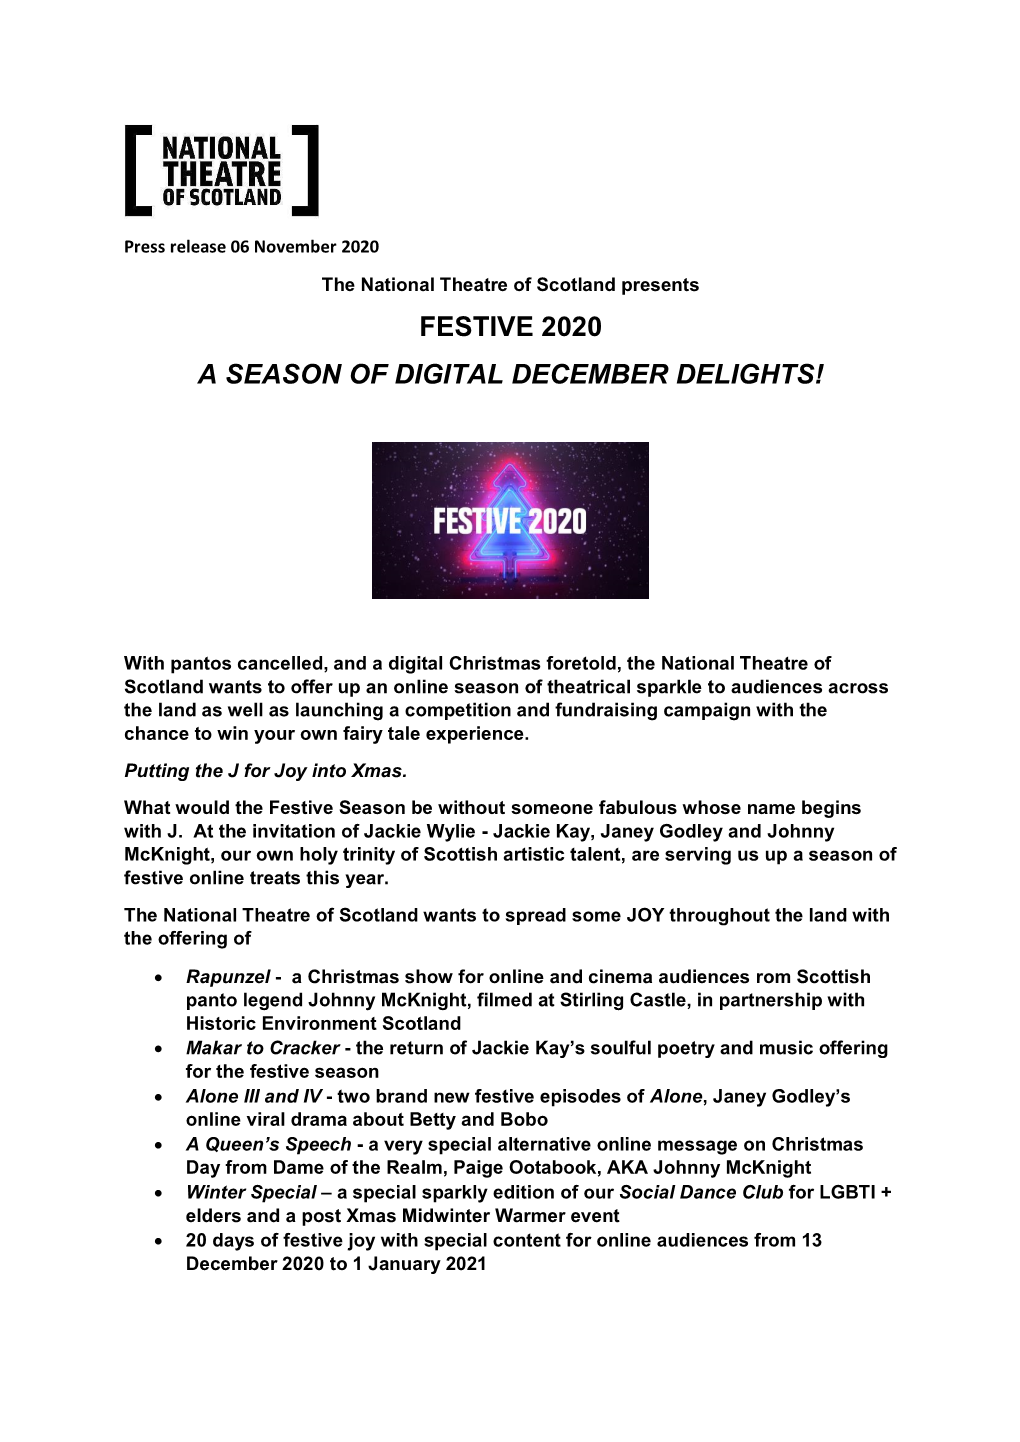 Festive 2020 a Season of Digital December Delights!